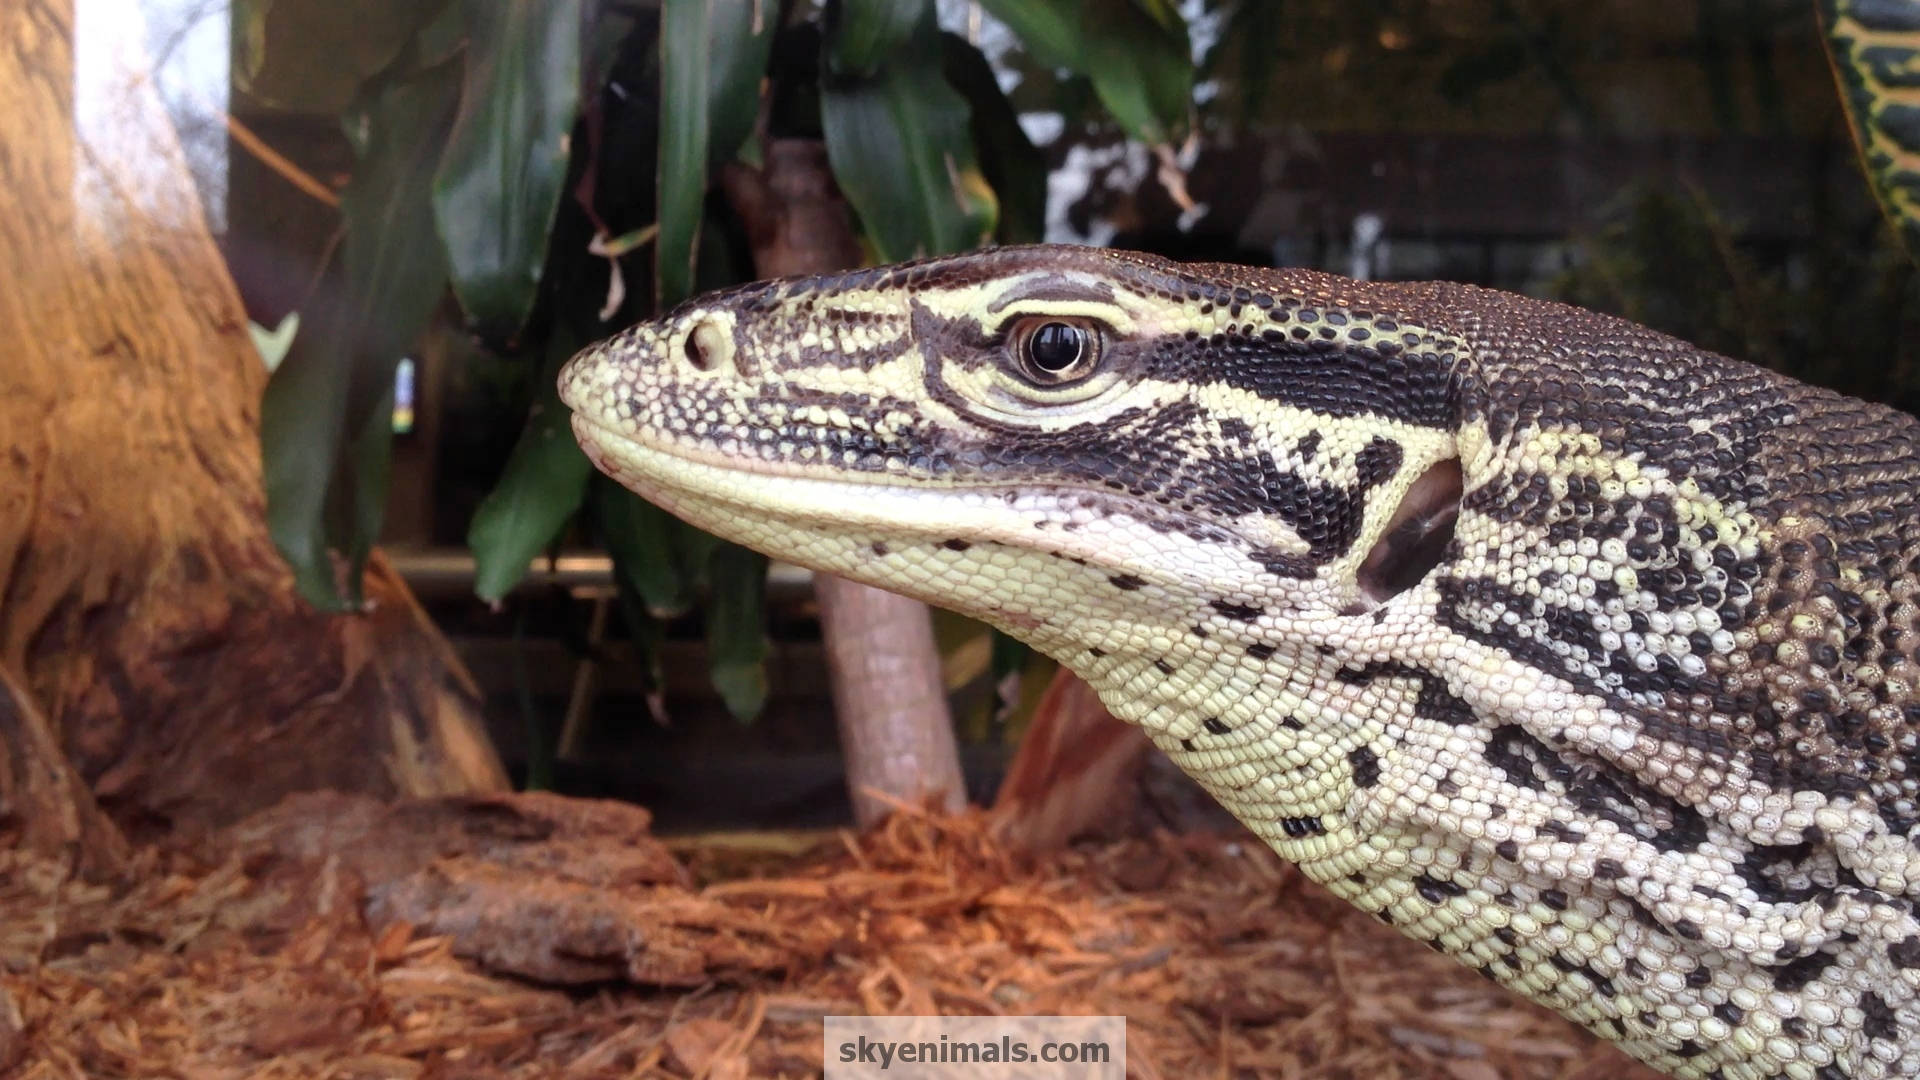 Stunning Close-up of a Captive Argus Monitor Lizard Wallpaper